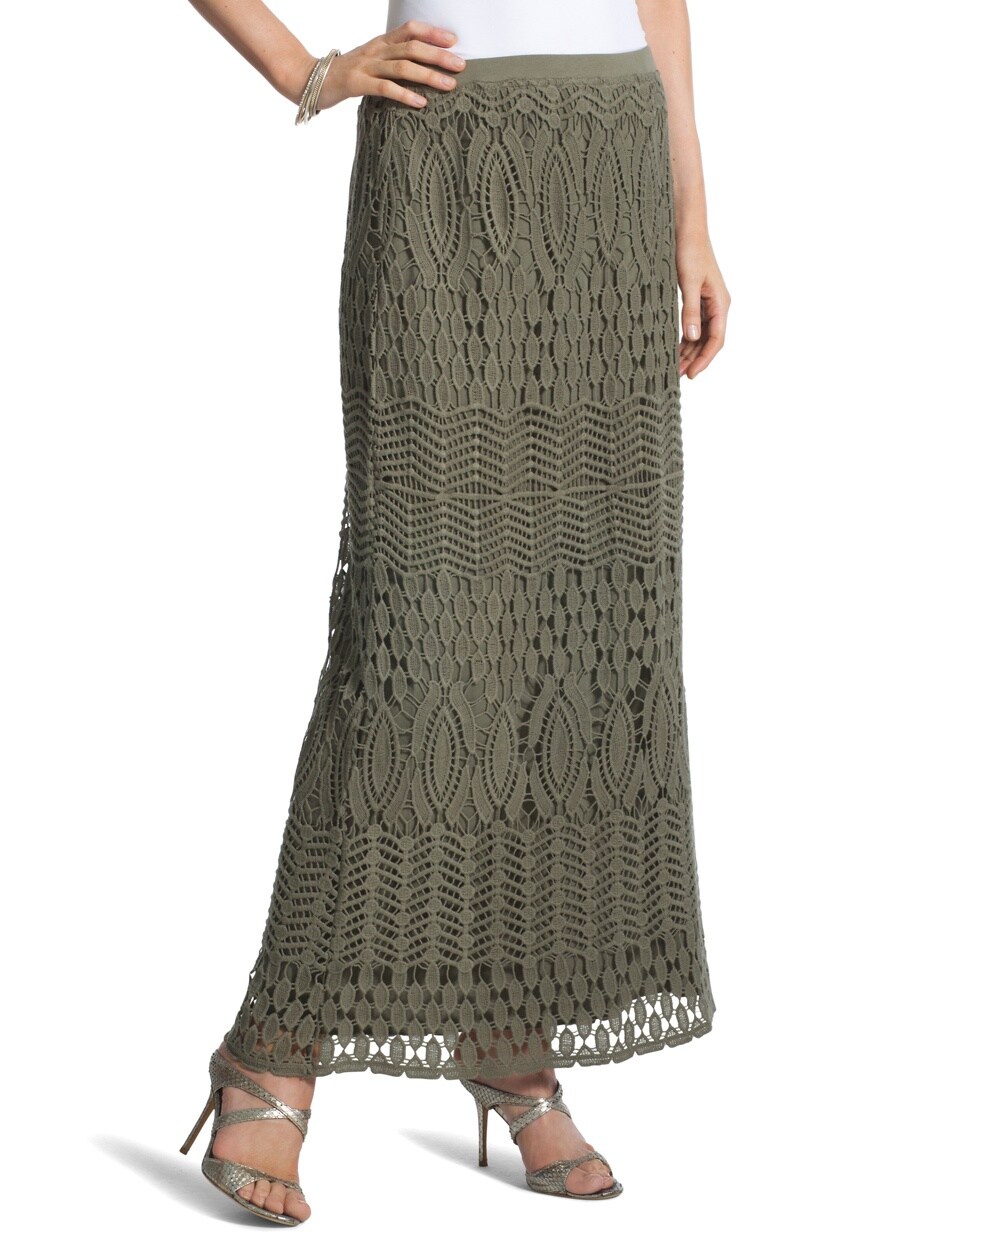 Chloe Crocheted Lace Maxi Skirt